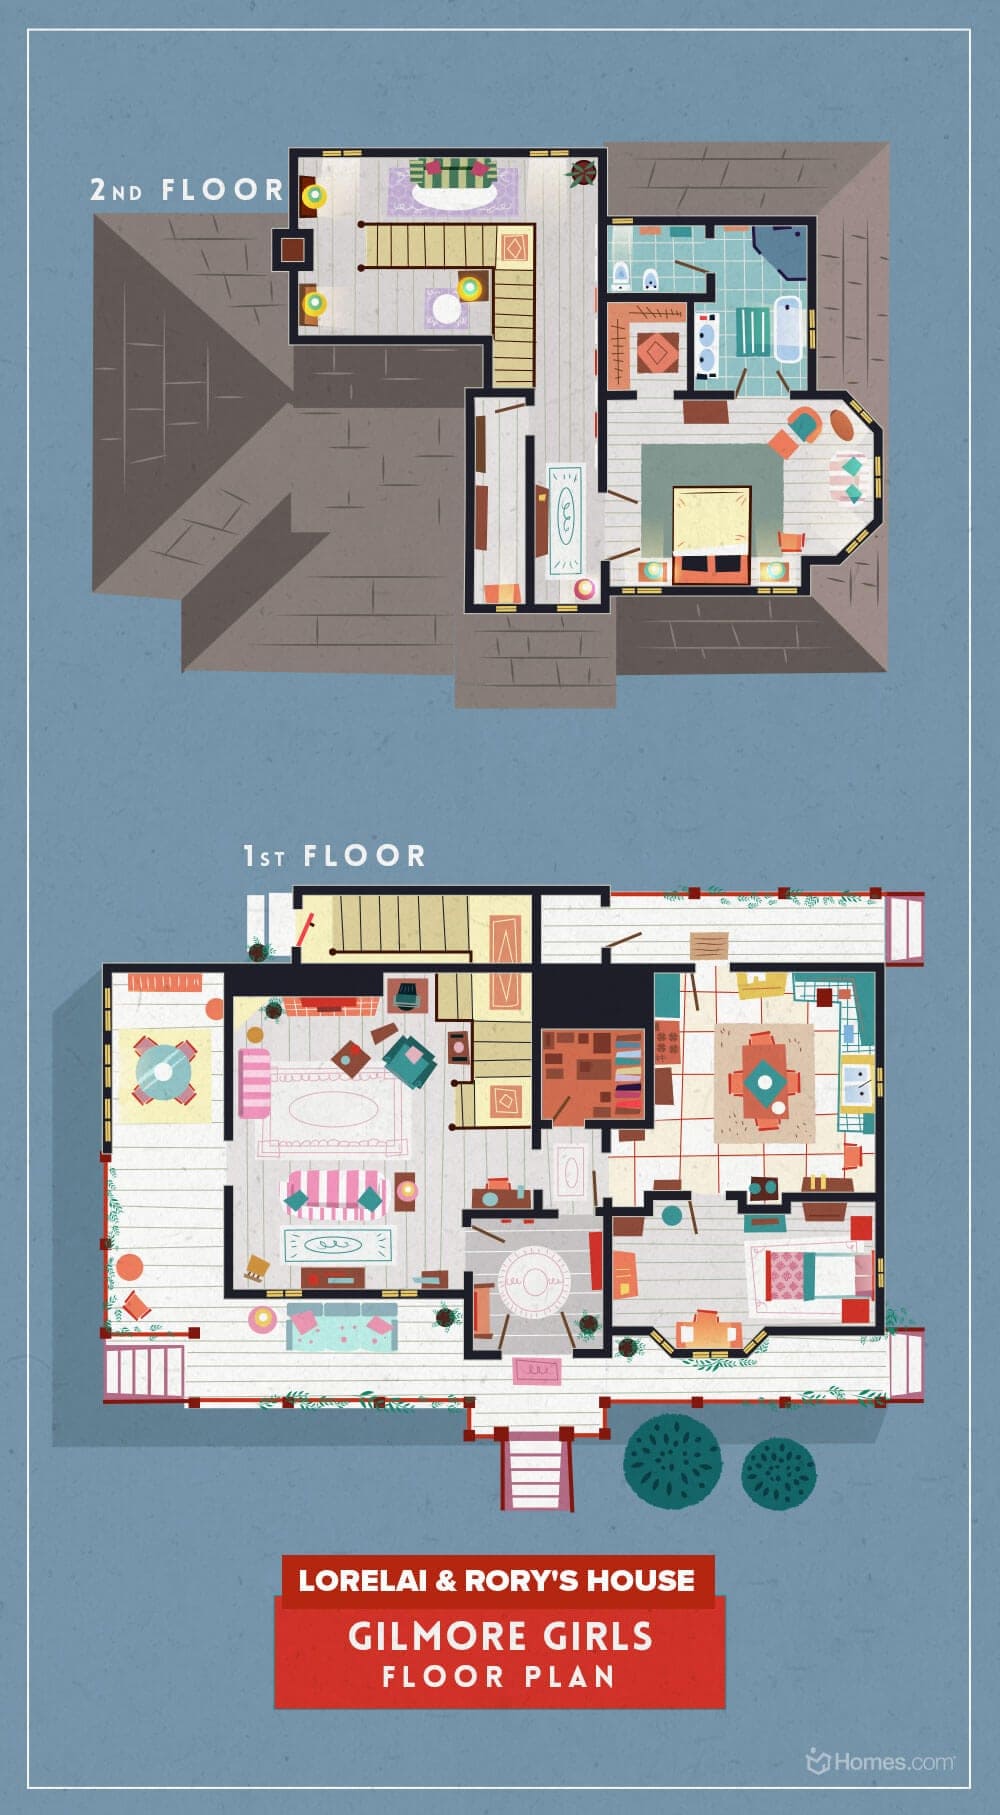 home-floor-plans-illustrations-4